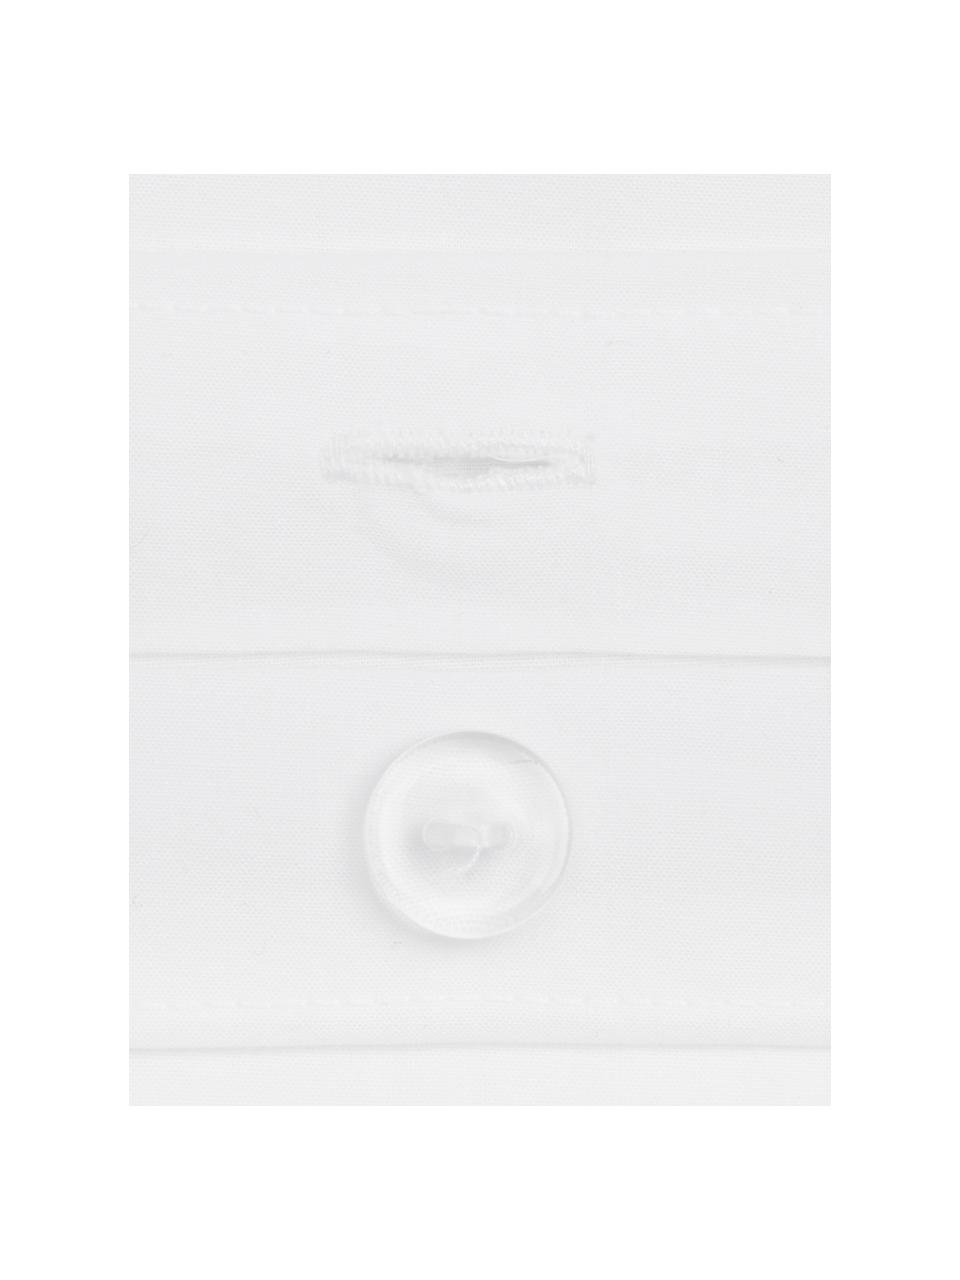 Baumwollperkal-Kopfkissenbezüge Elsie in Weiß, 2 Stück, Webart: Perkal Fadendichte 200 TC, Weiß, B 40 x L 80 cm